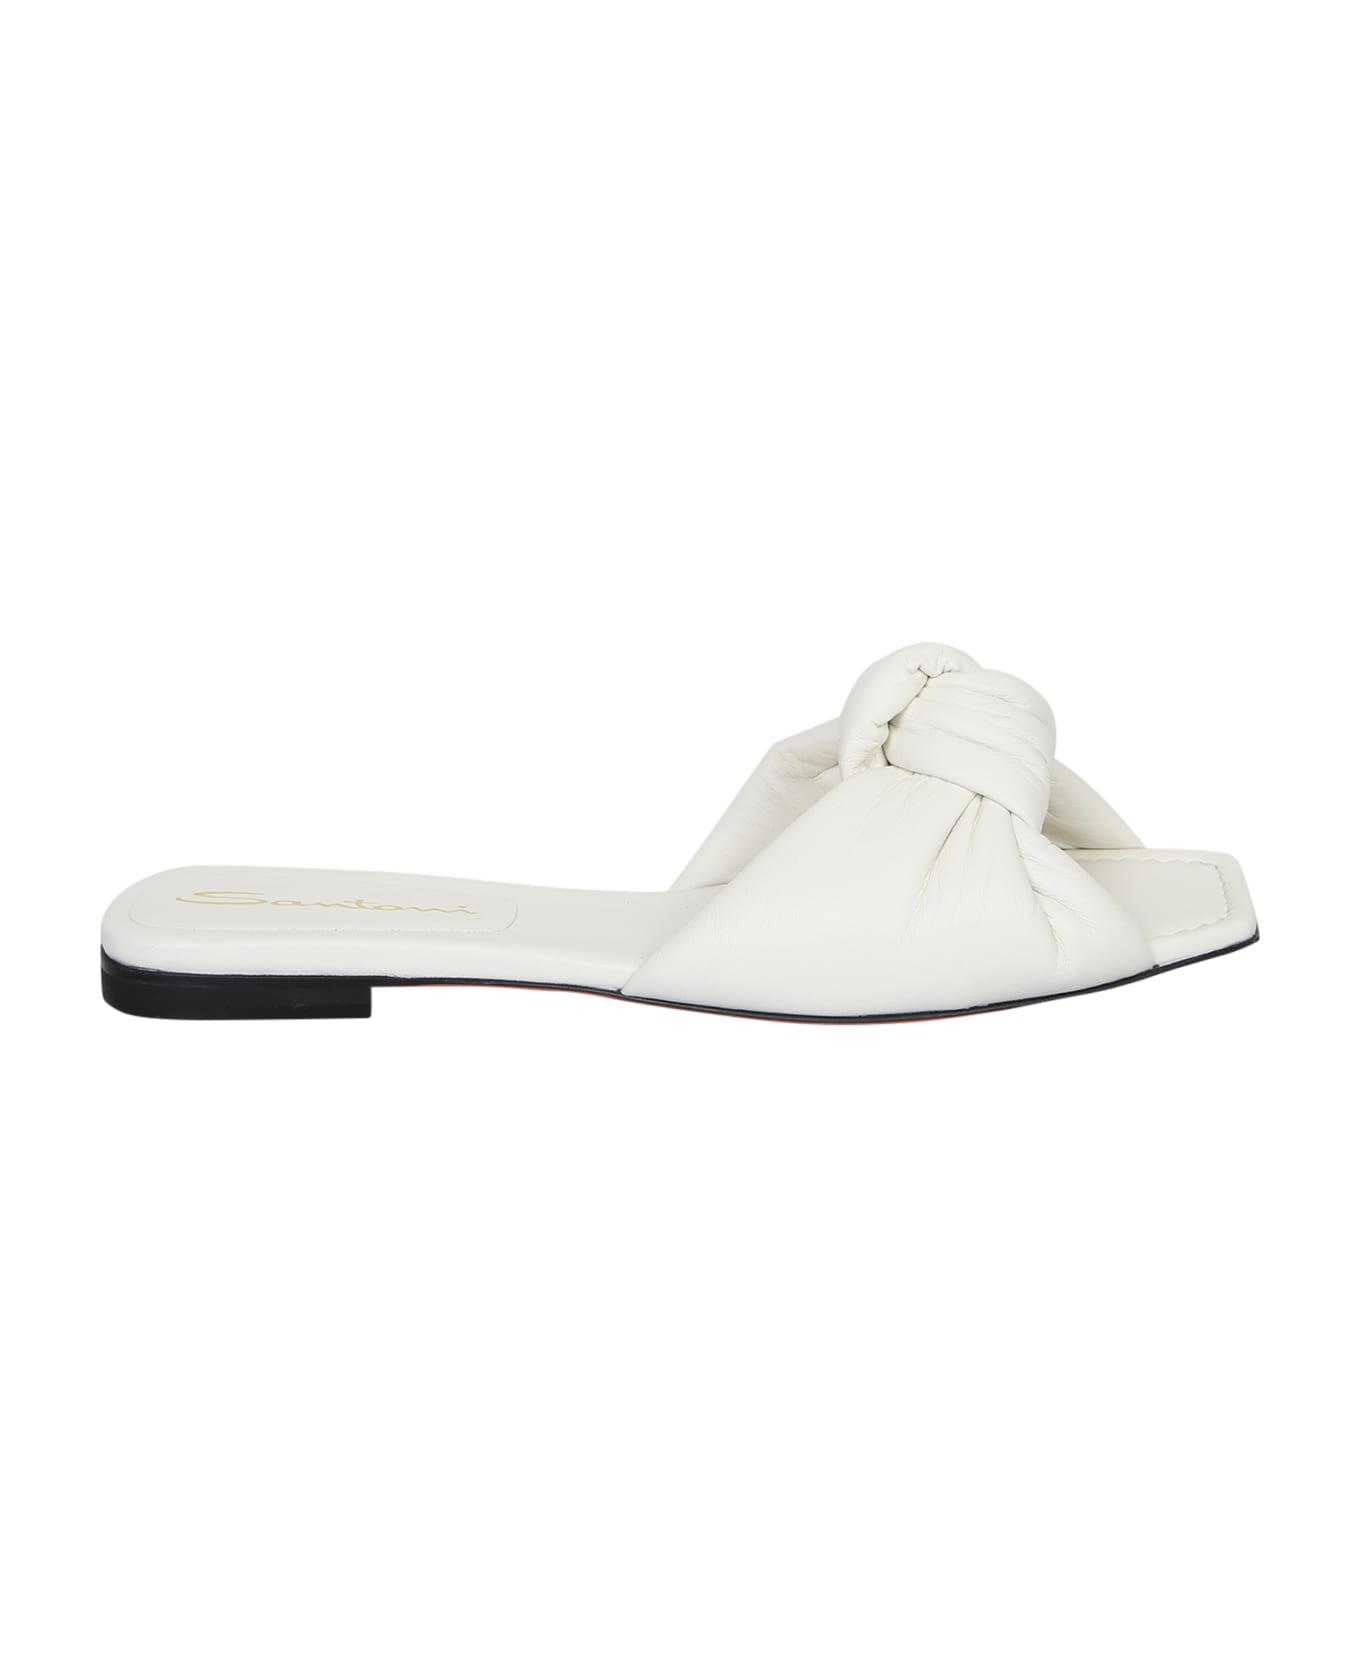 Santoni Knot Slide Sandals - White